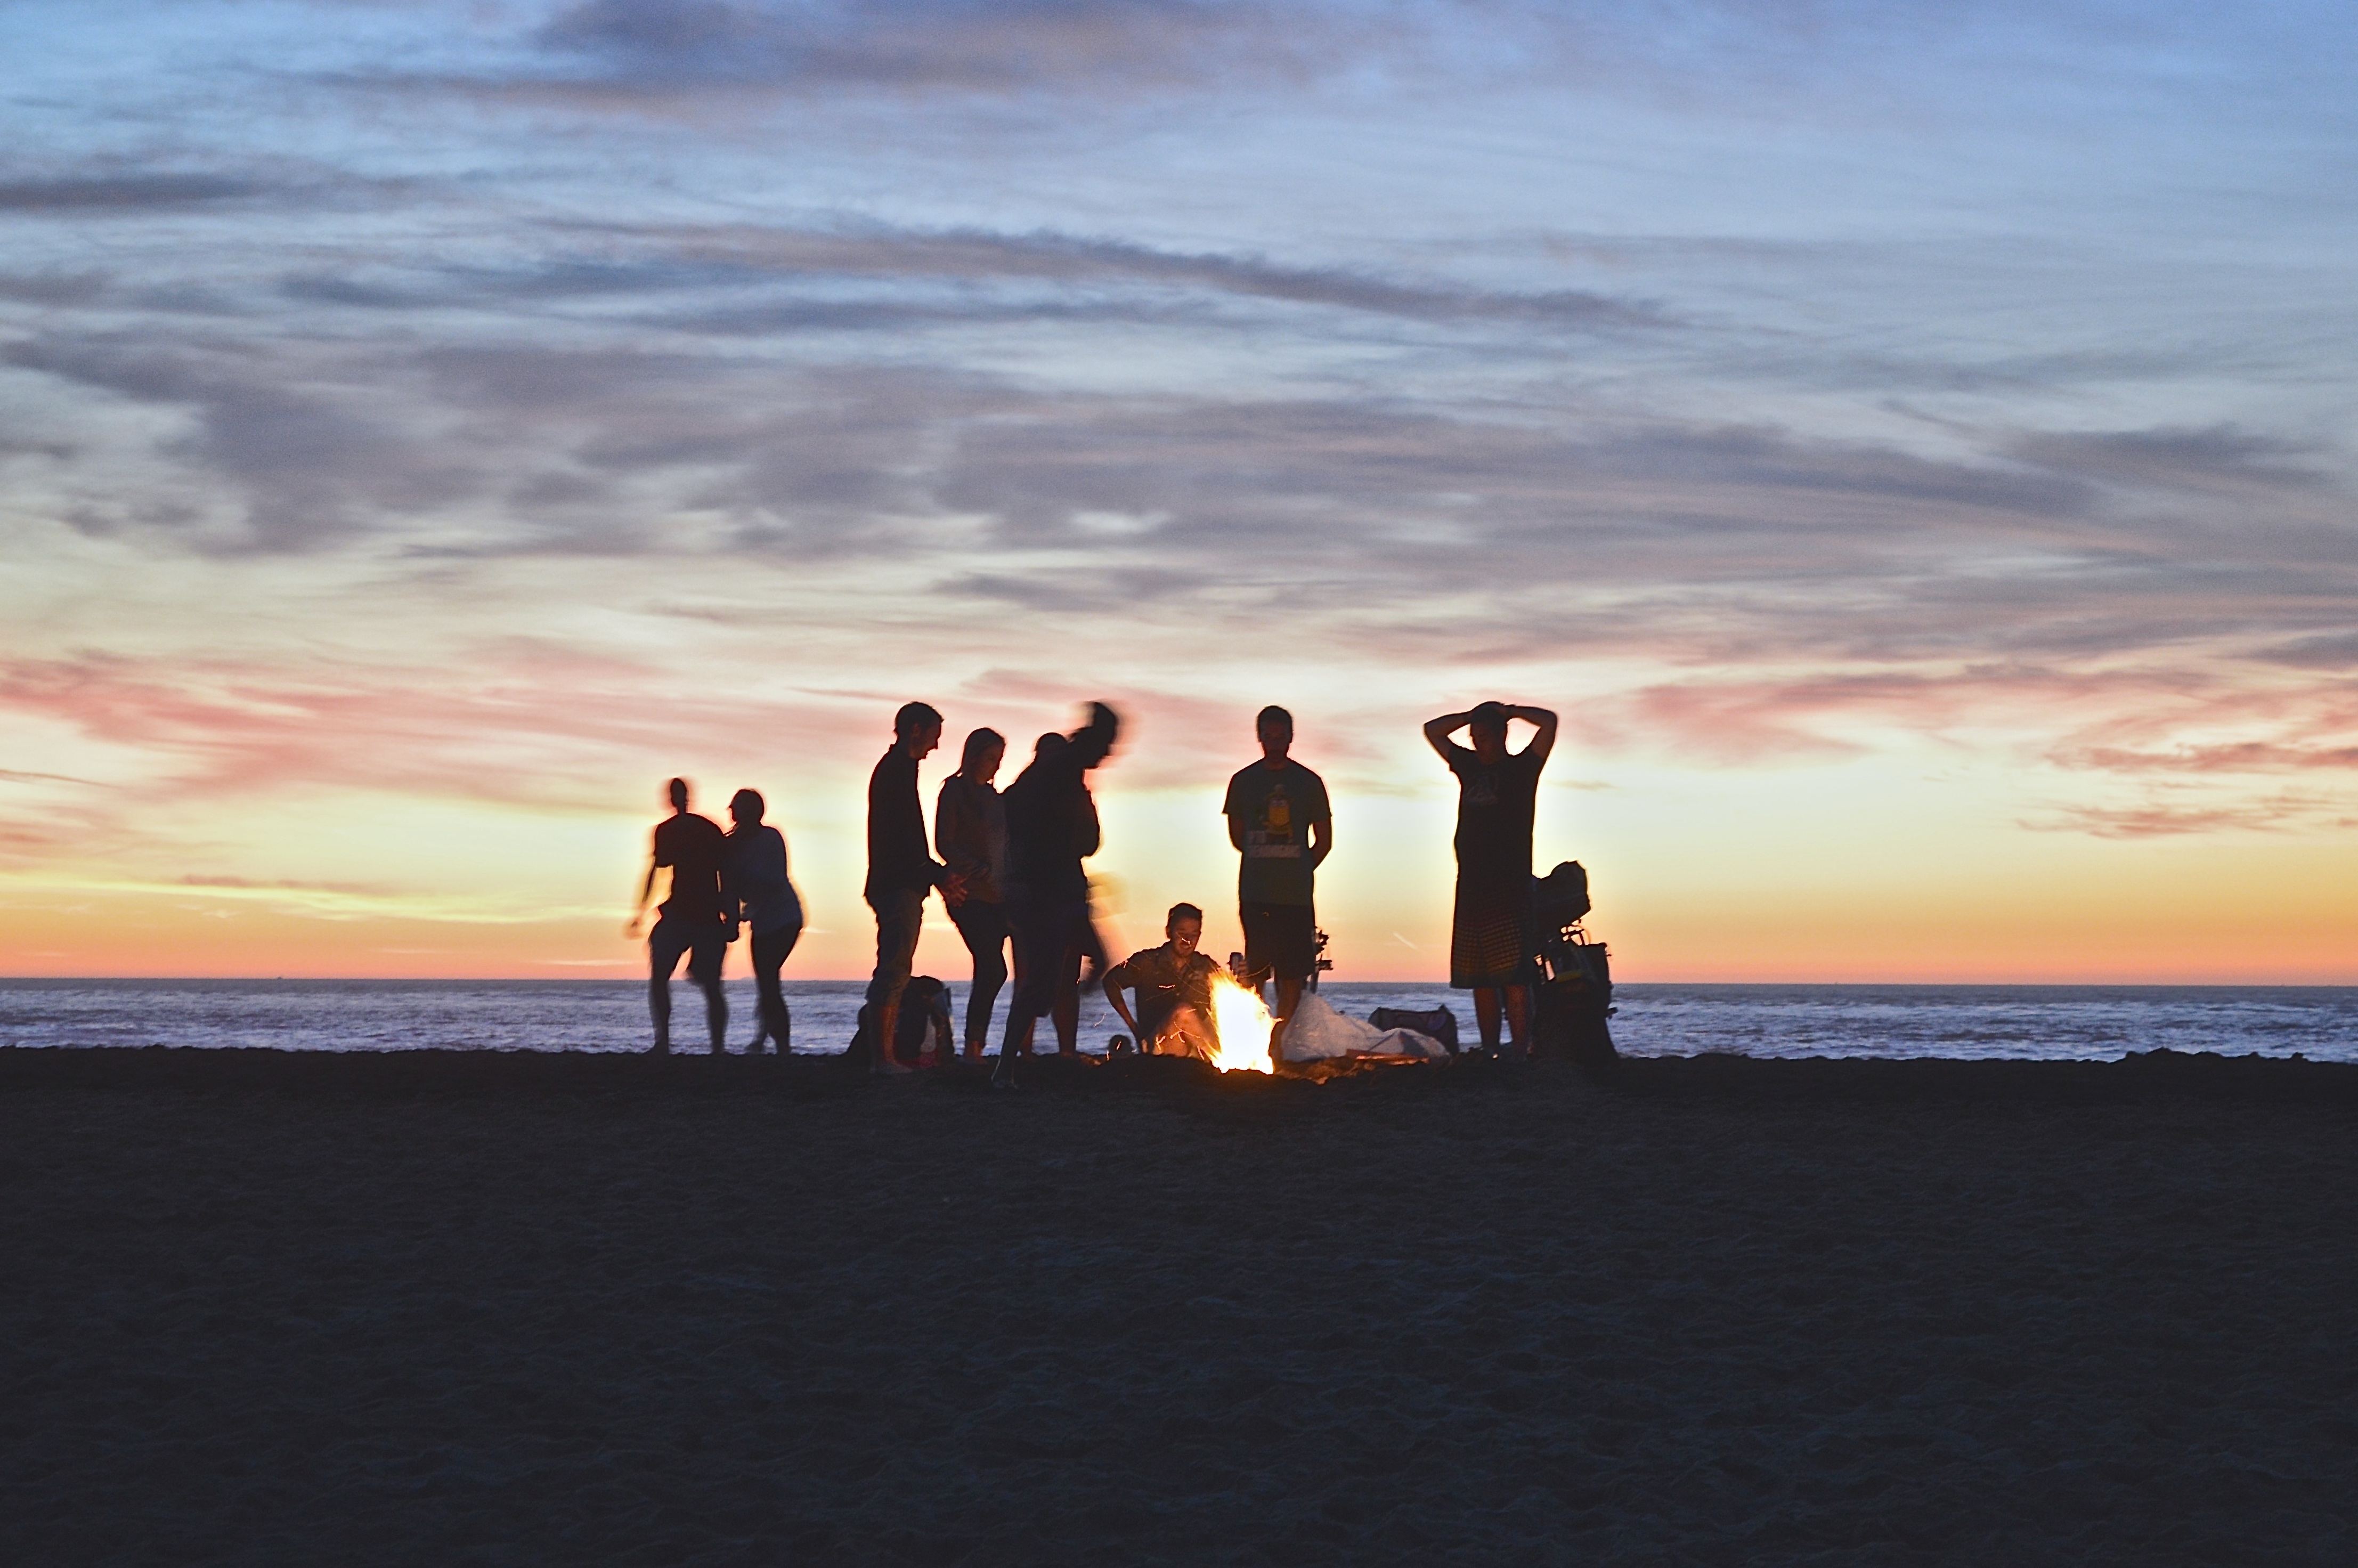 campfire-friends-holiday-summer-pexels